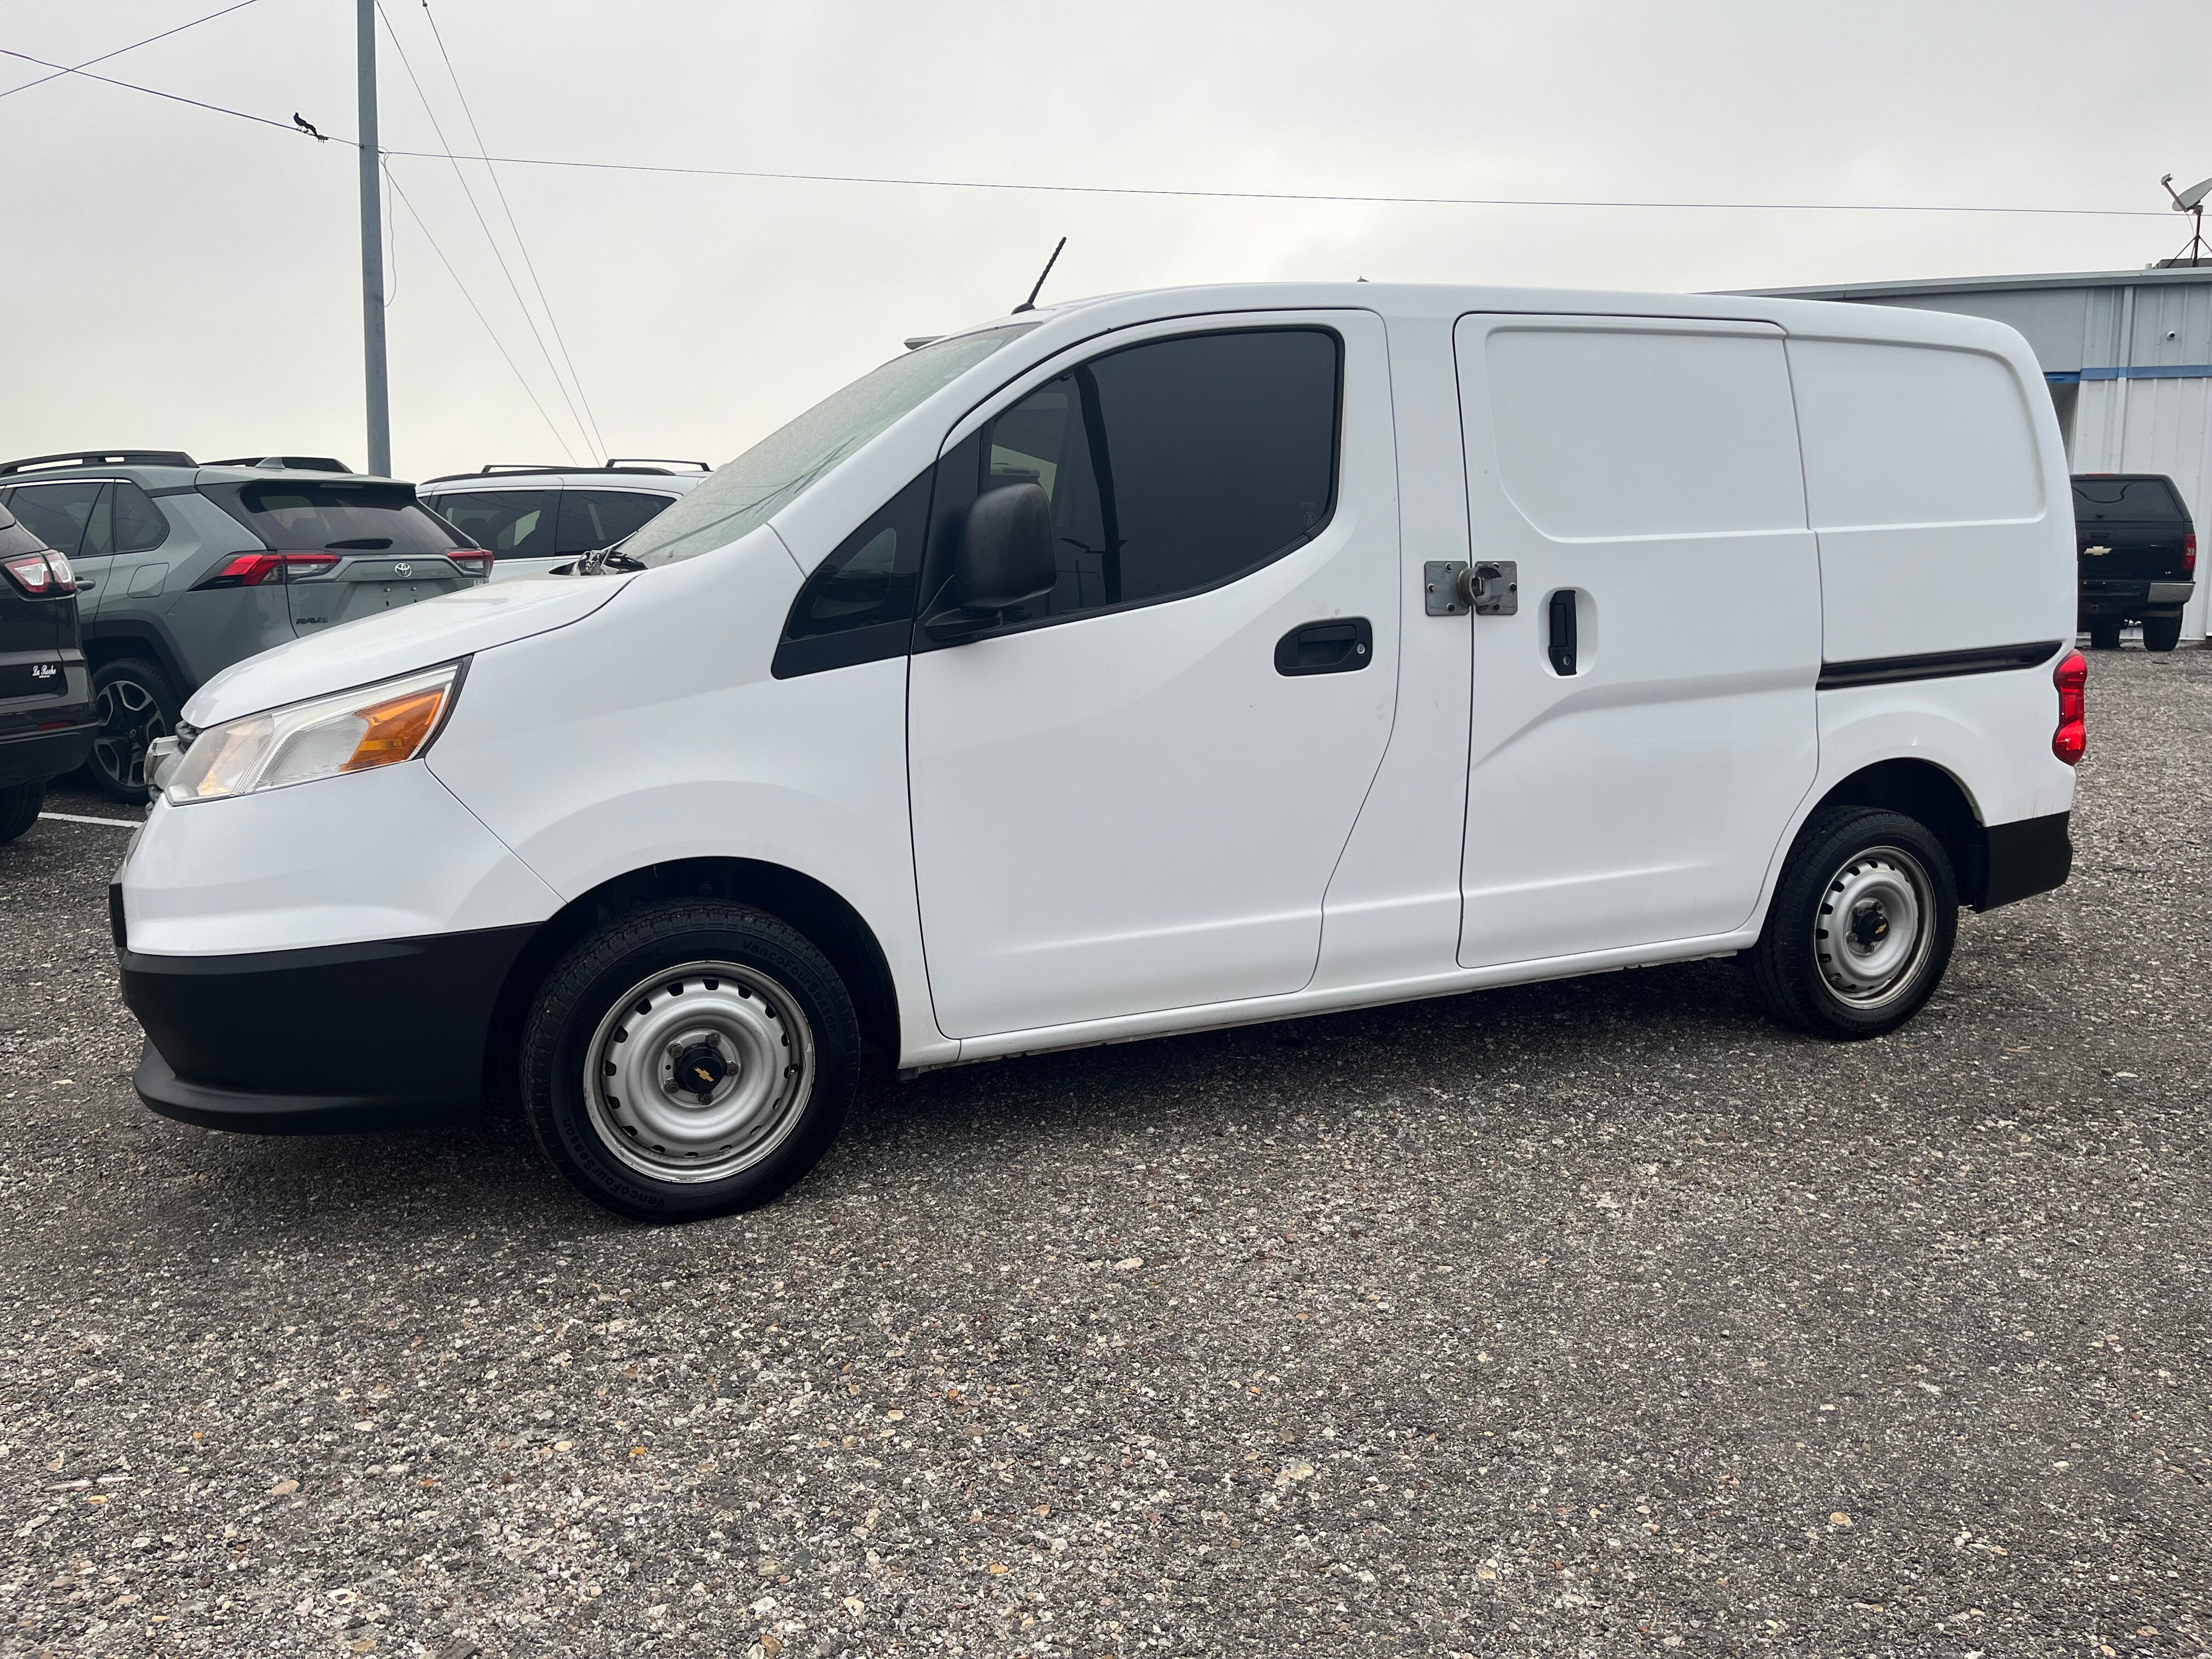 Used 2018 Chevrolet City Express 1LS with VIN 3N63M0YN1JK692620 for sale in Brenham, TX